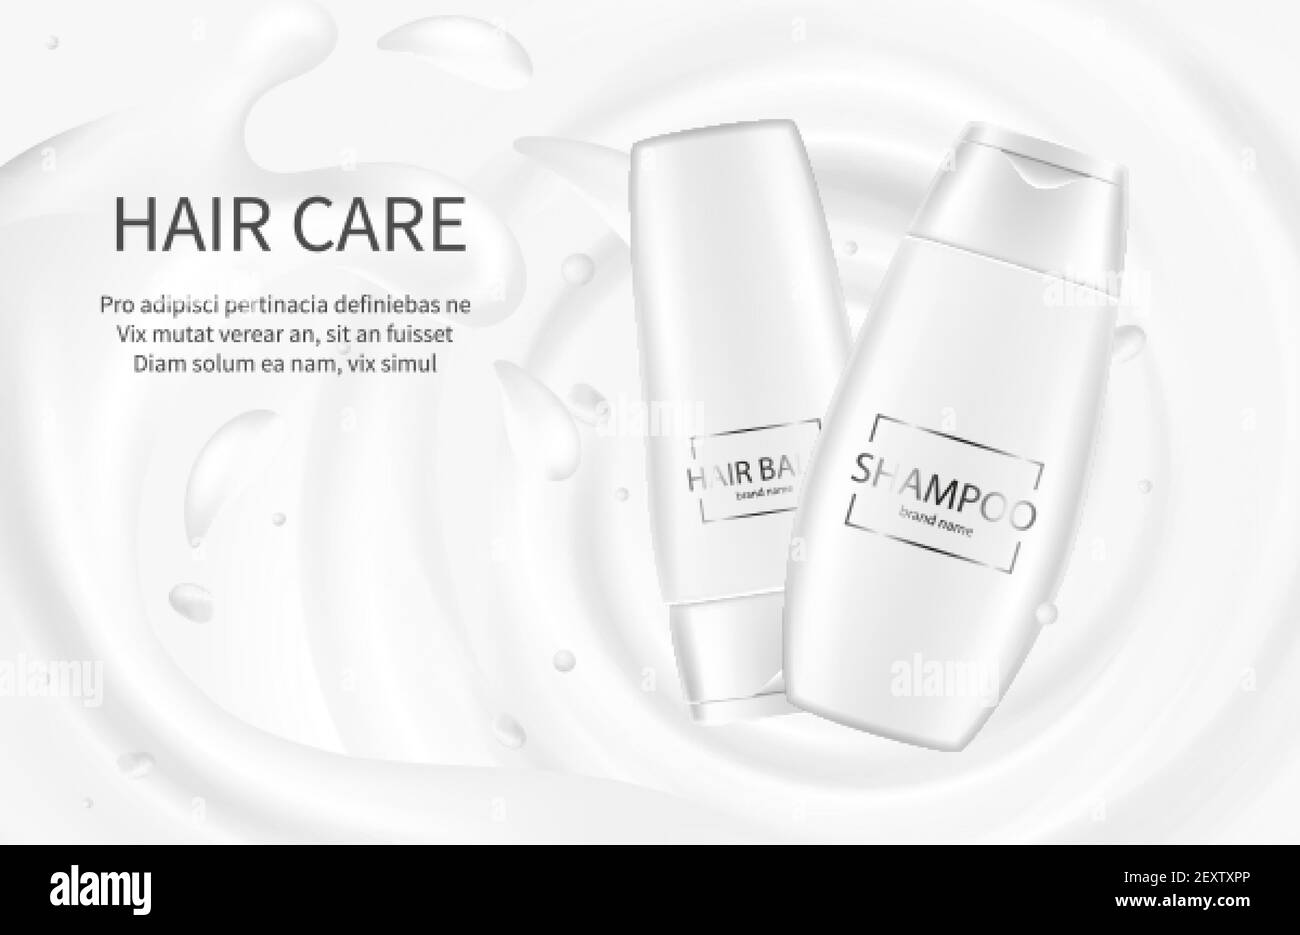 shampoo advertisement example